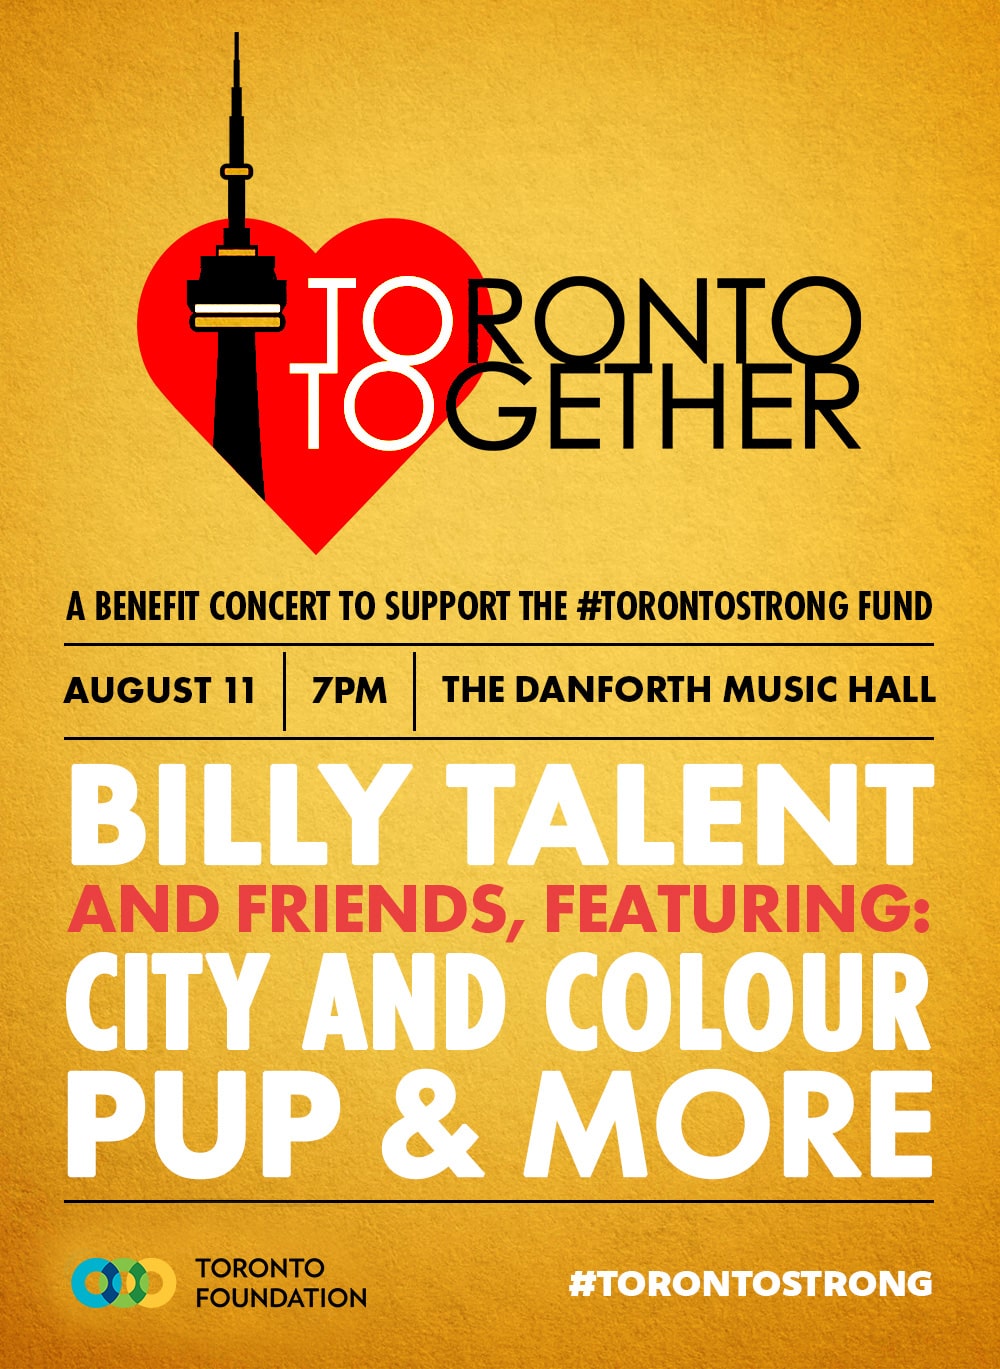 Toronto Together event poster